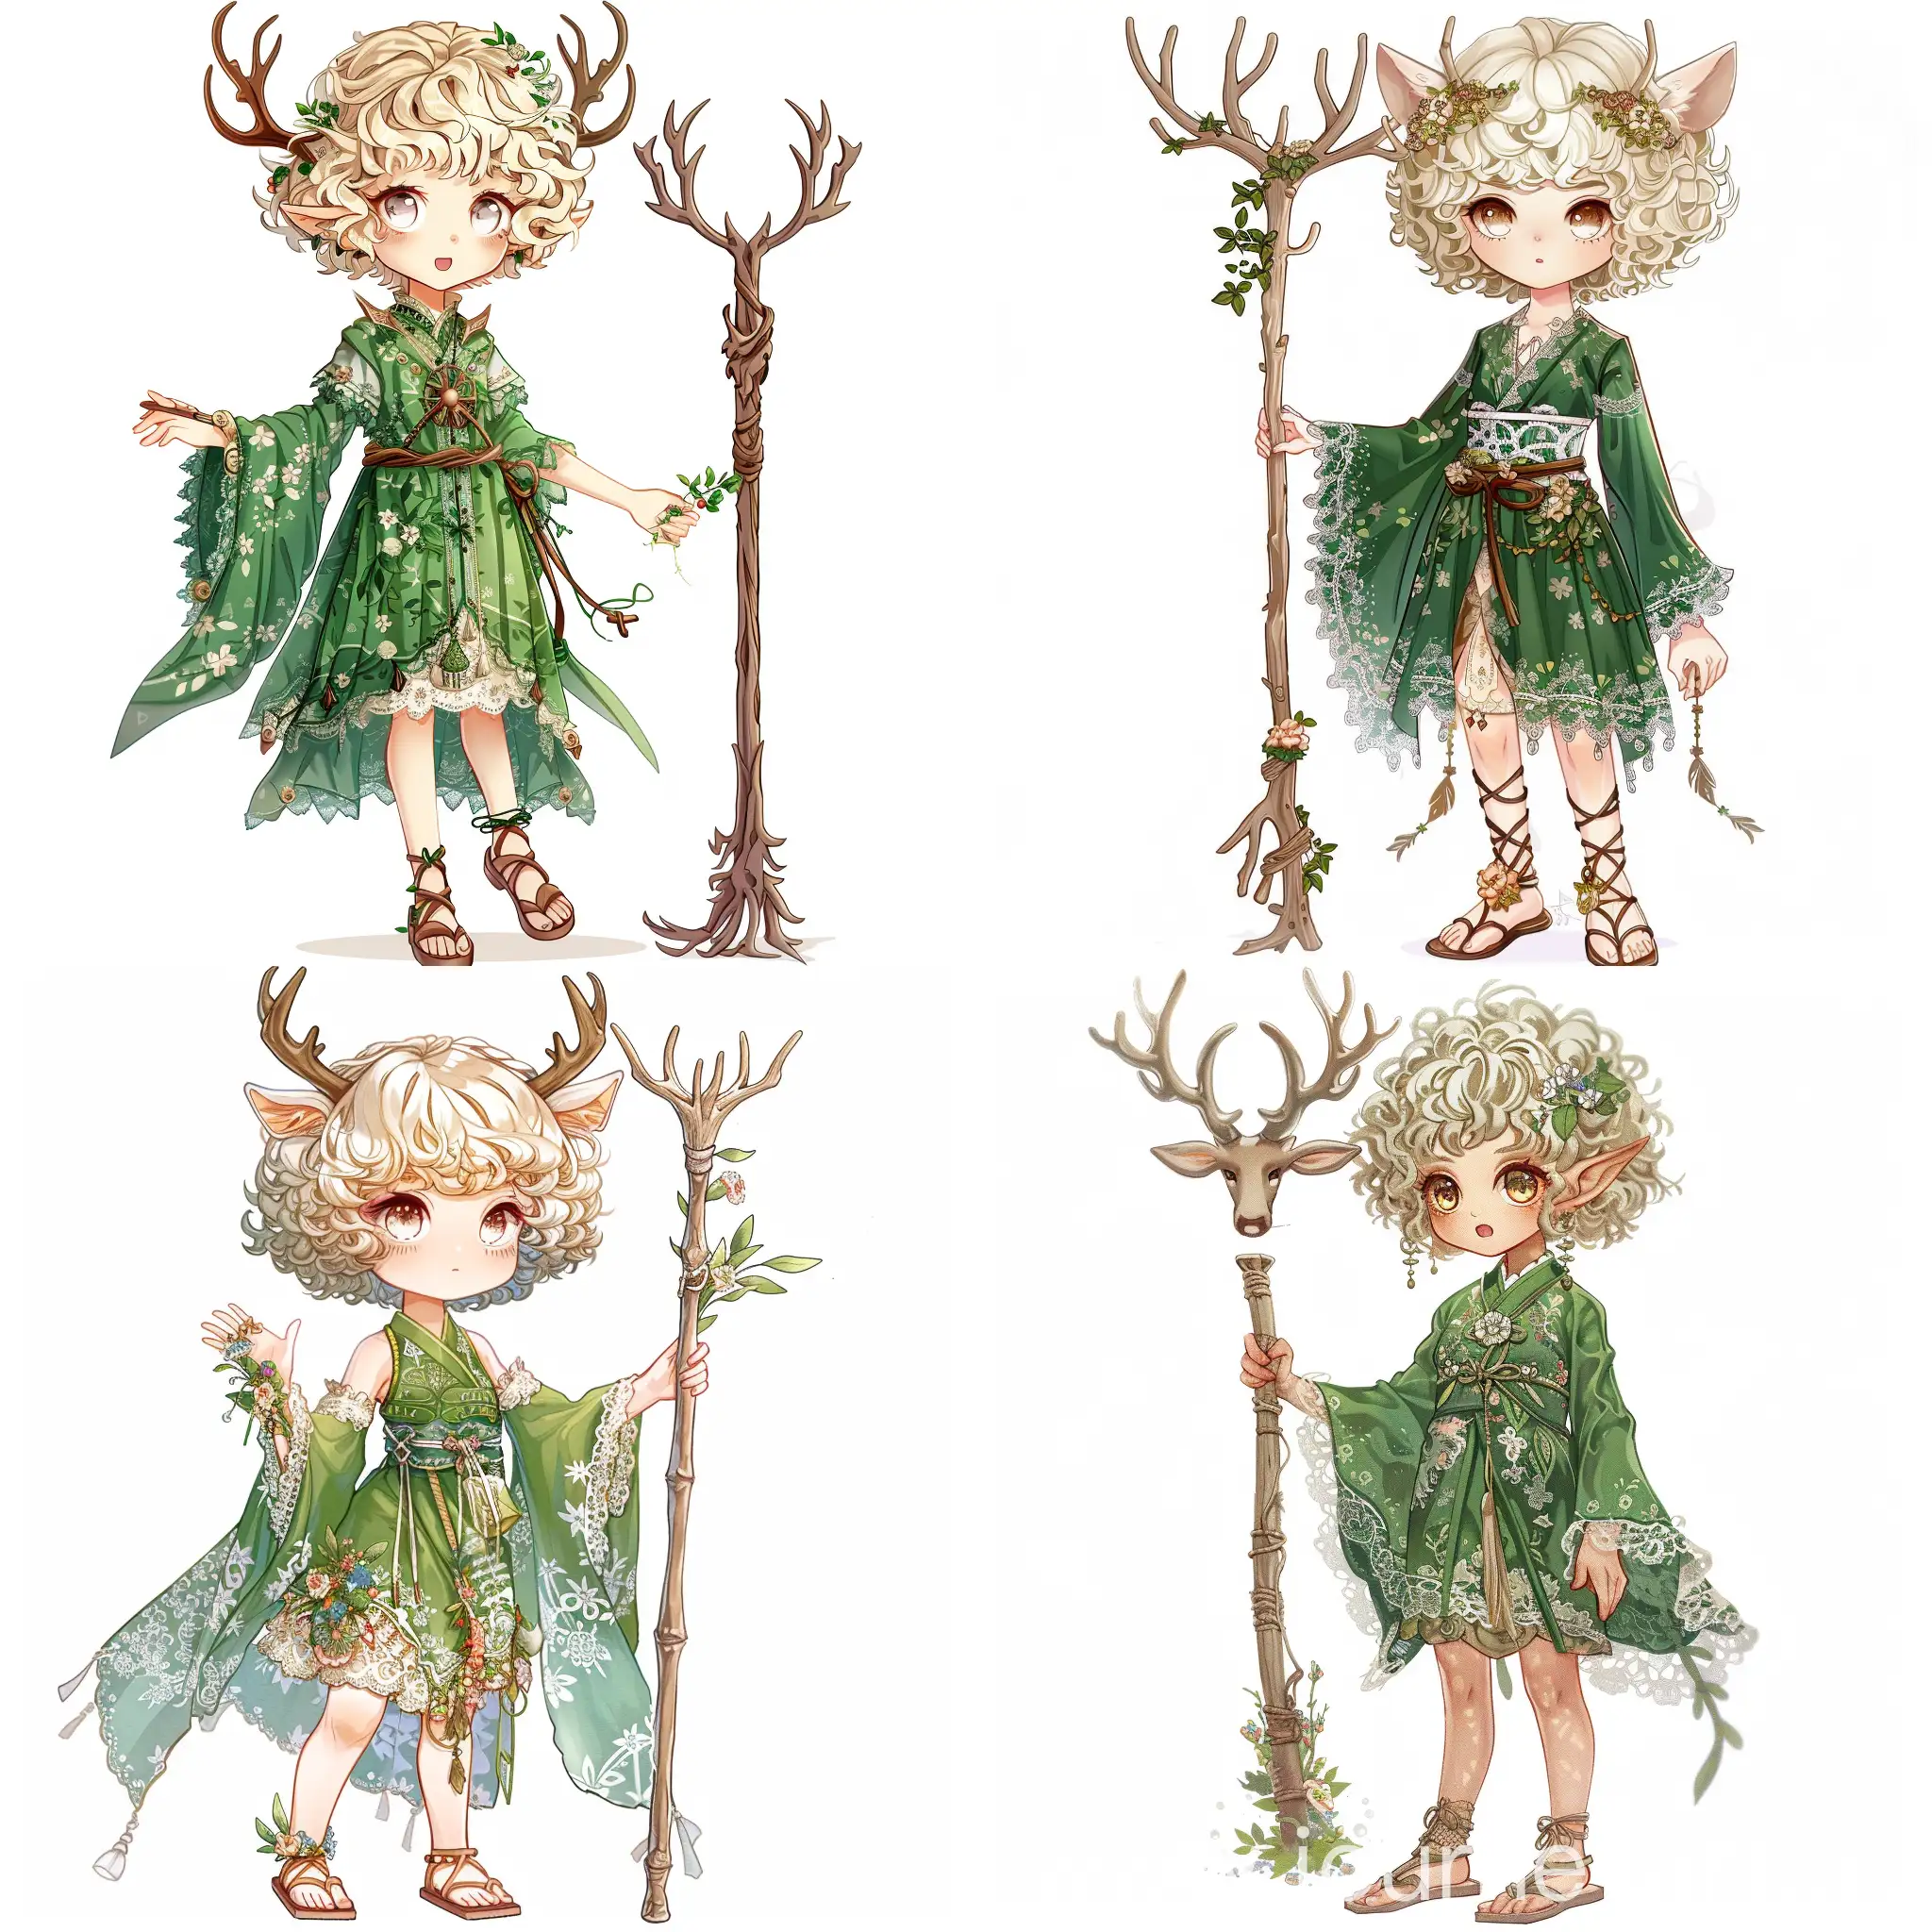 Chibi-Anime-Girl-with-Deer-Antlers-in-Oriental-Dress